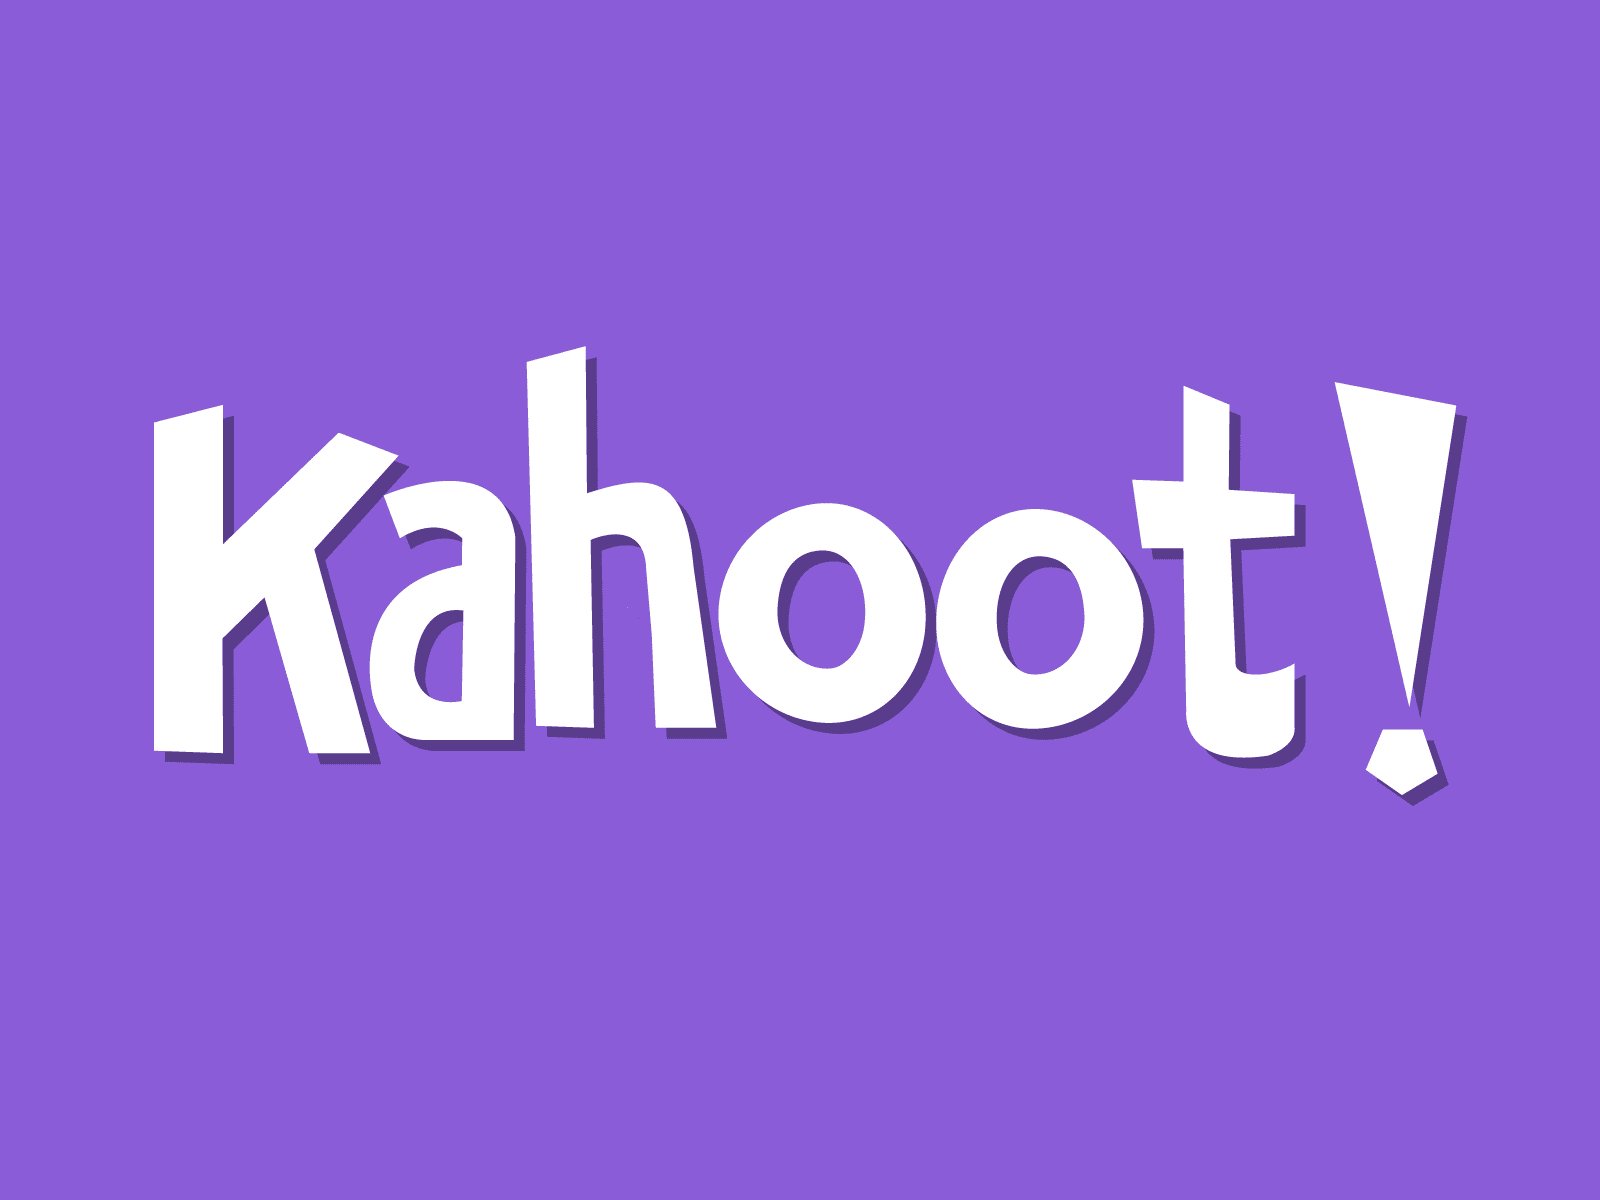 logo_purple